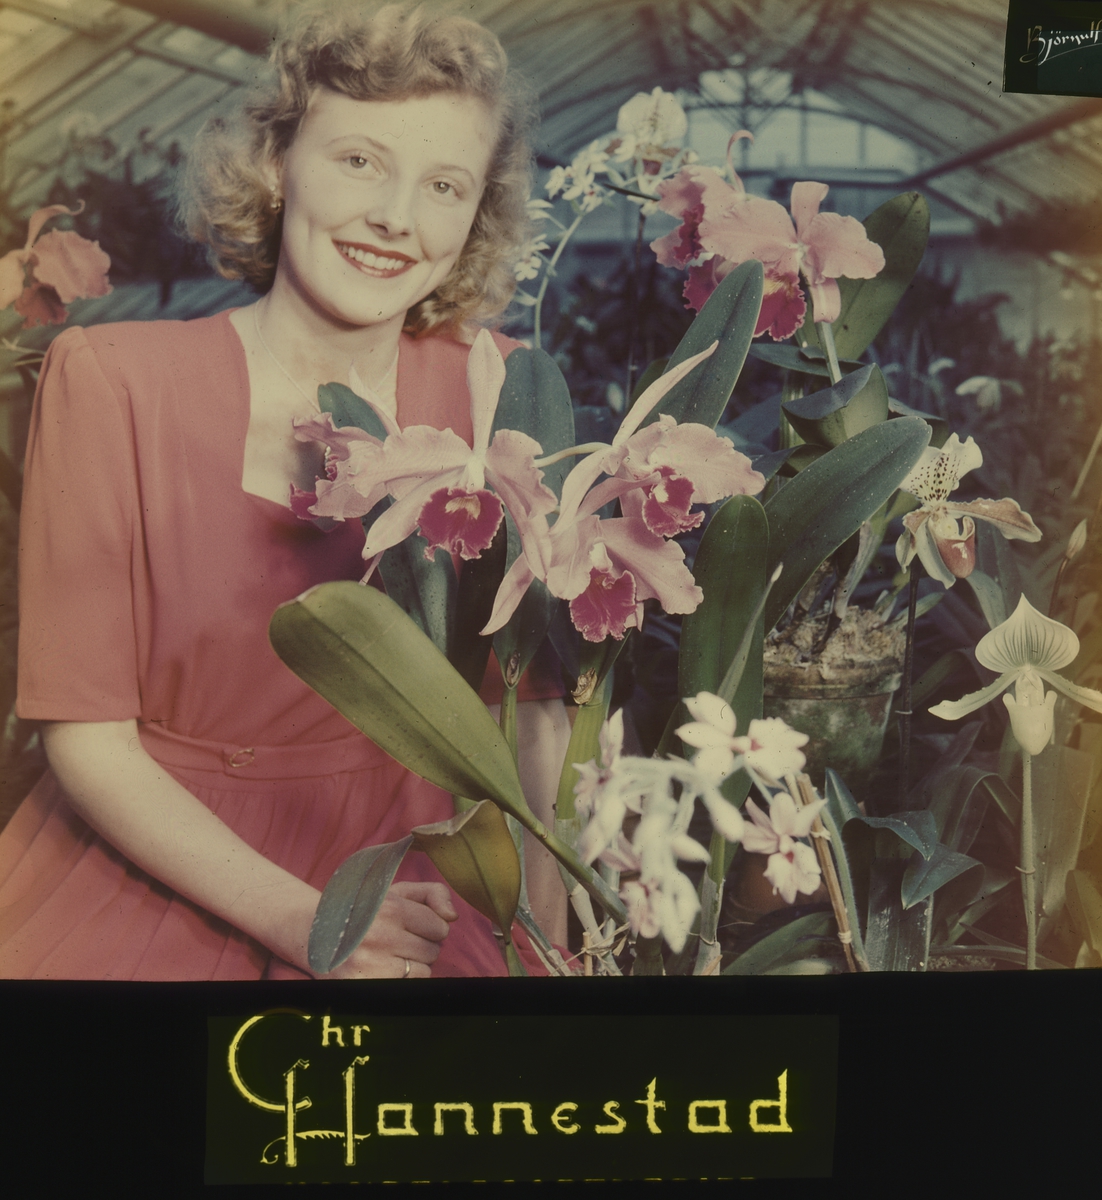 Kinoreklame fra 1950-1960-årene. Kvinne i rød kjole sitter med orkidèer i drivhus.